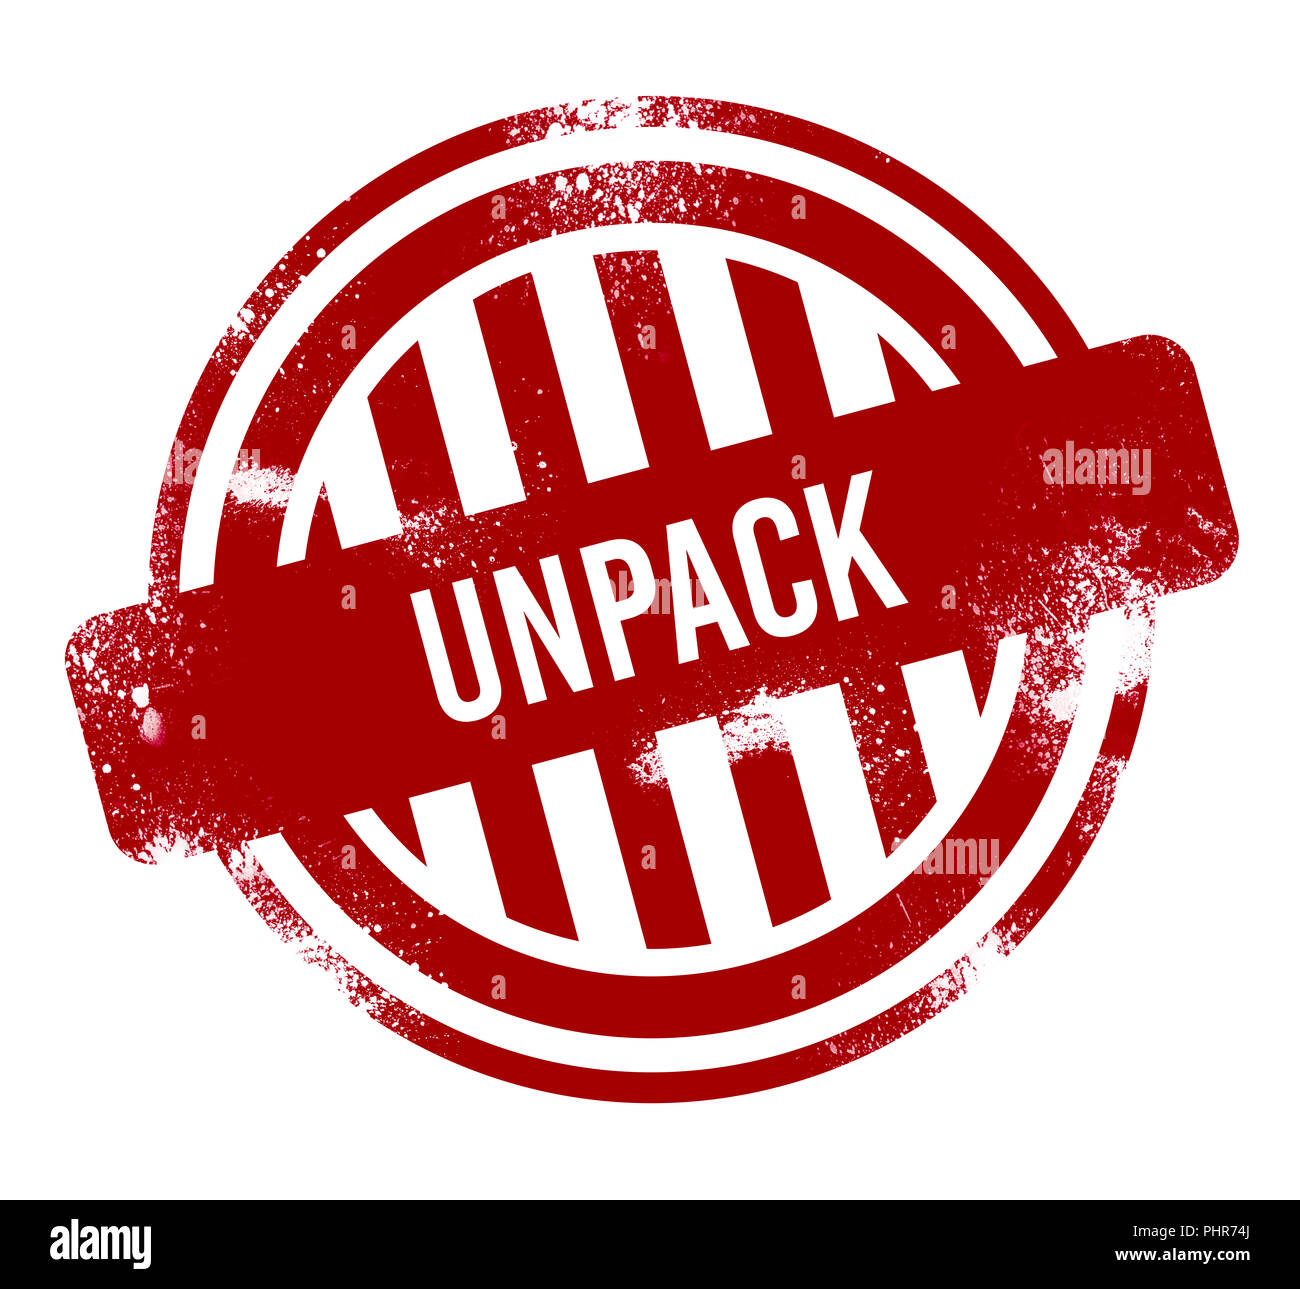 Unpack - red grunge button, stamp Stock Photo